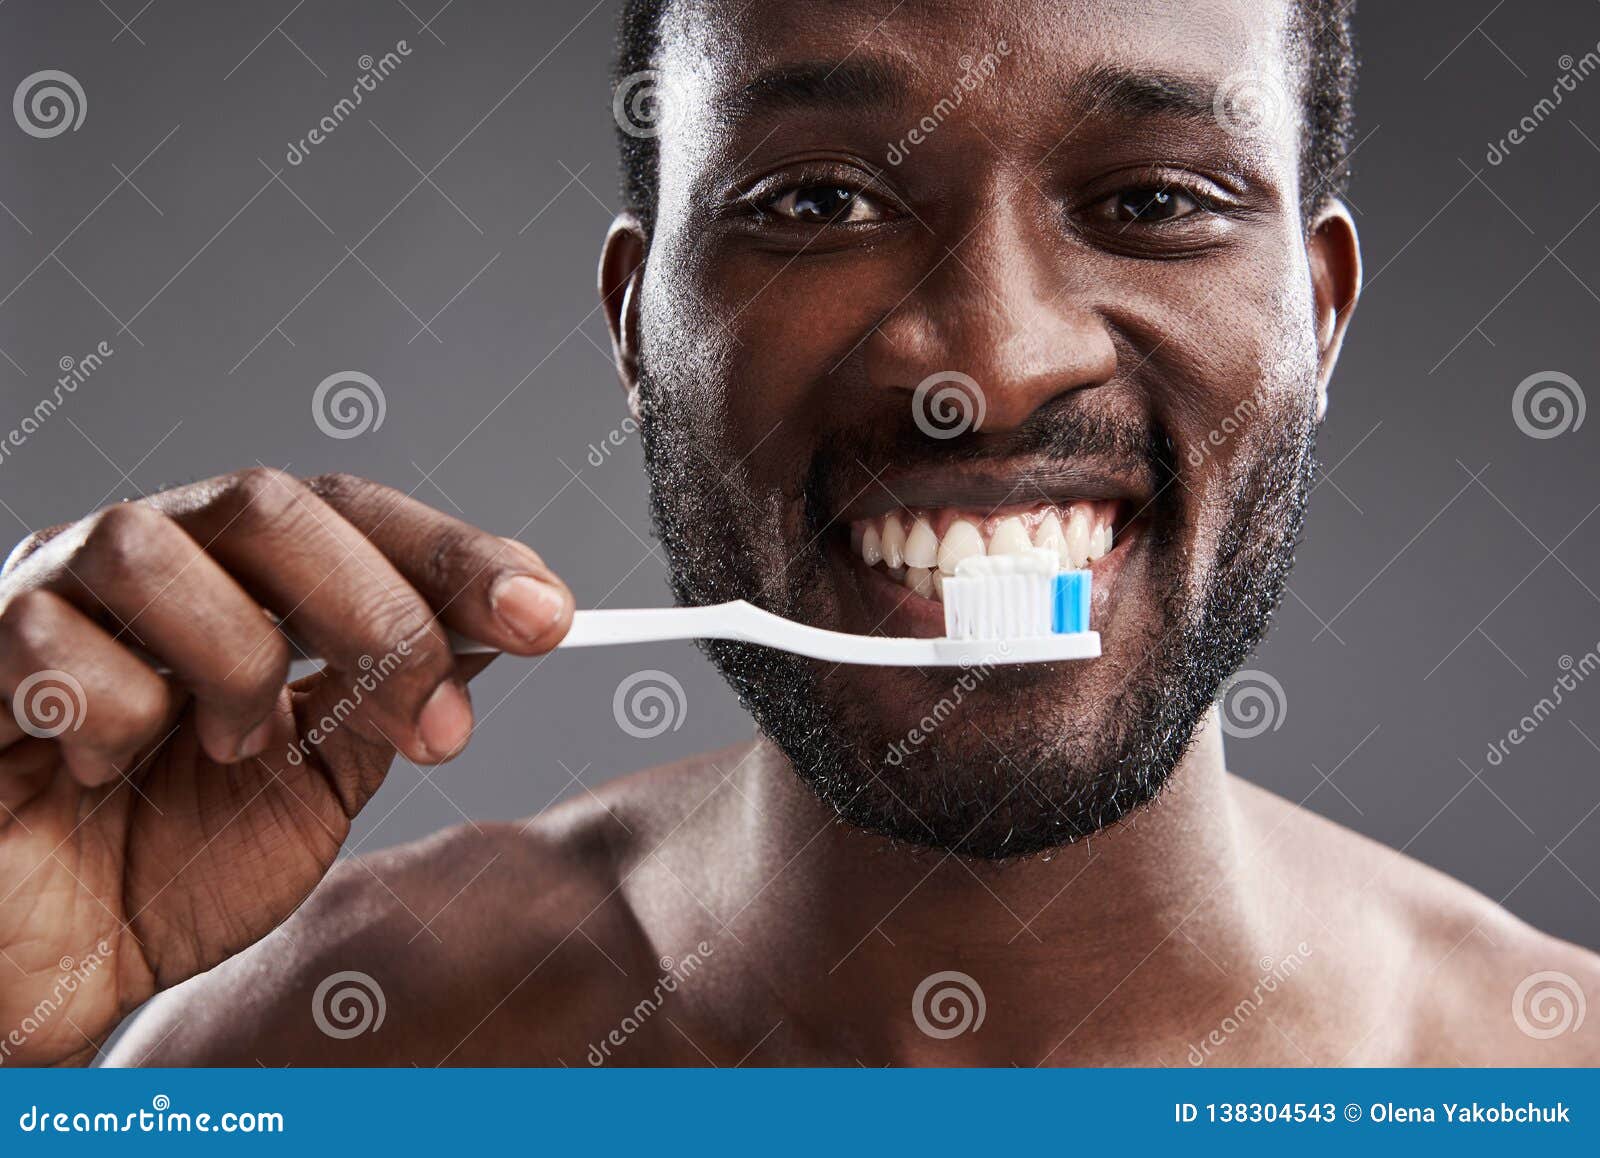 Close Up of a Joyful Afro American Man Brushing His Teeth Stock Image ...